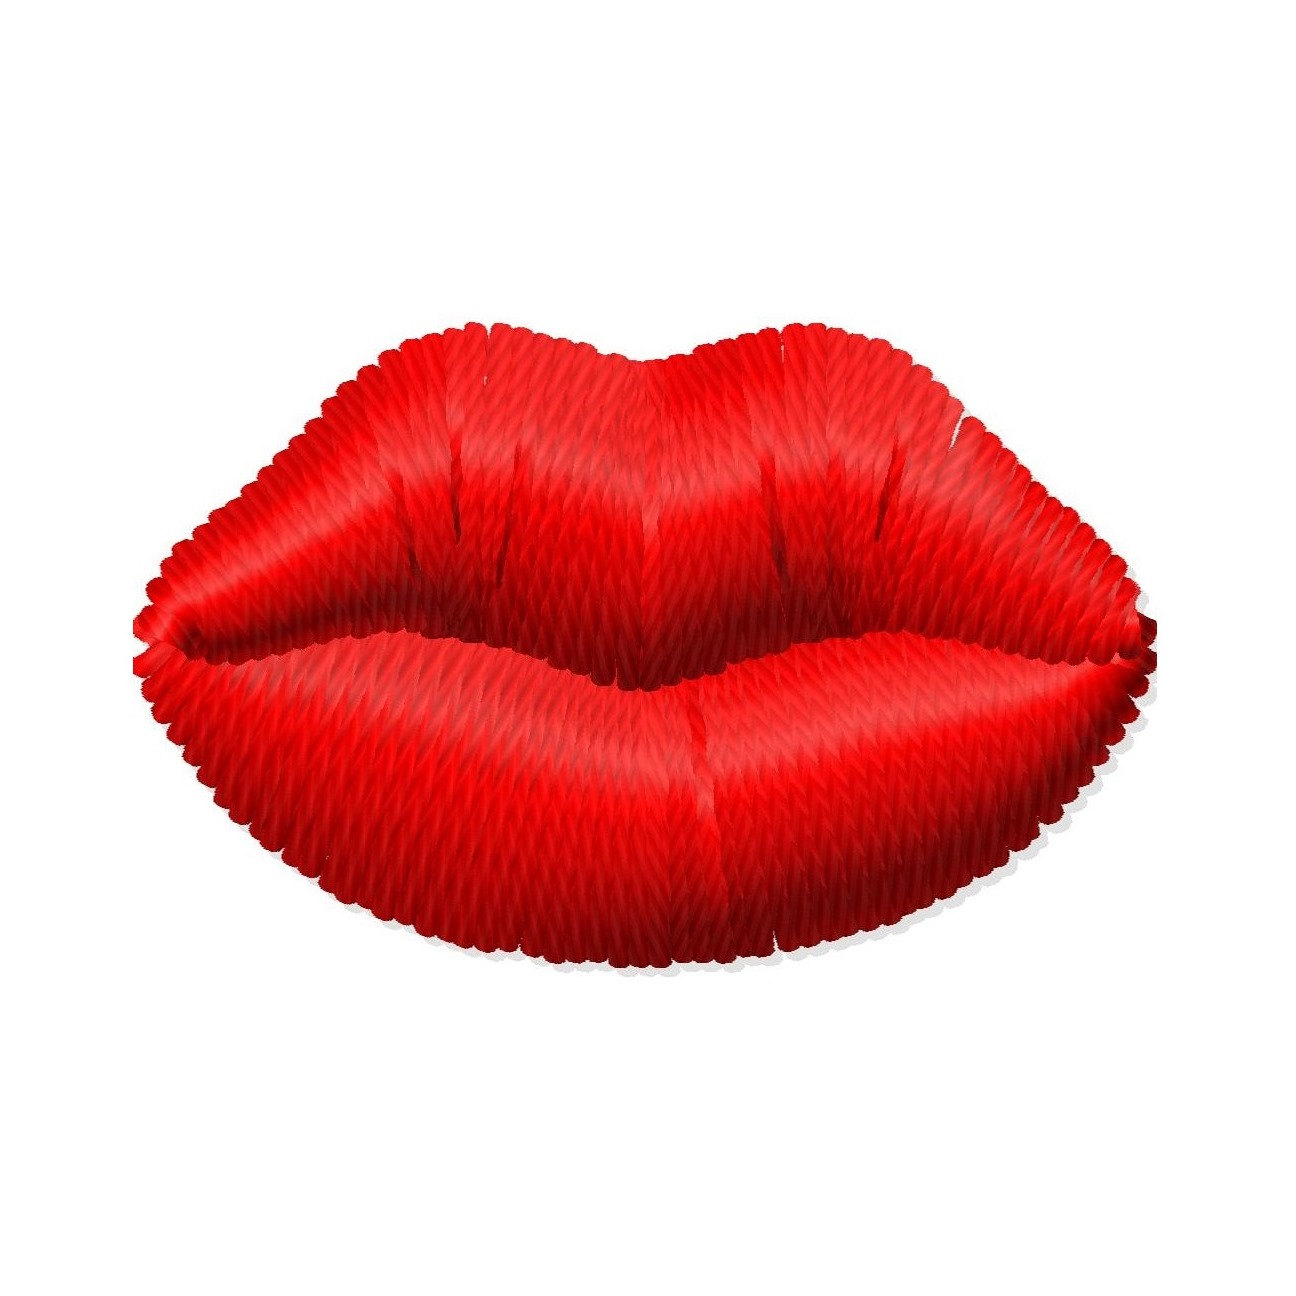 clip art of puckered lips - photo #38